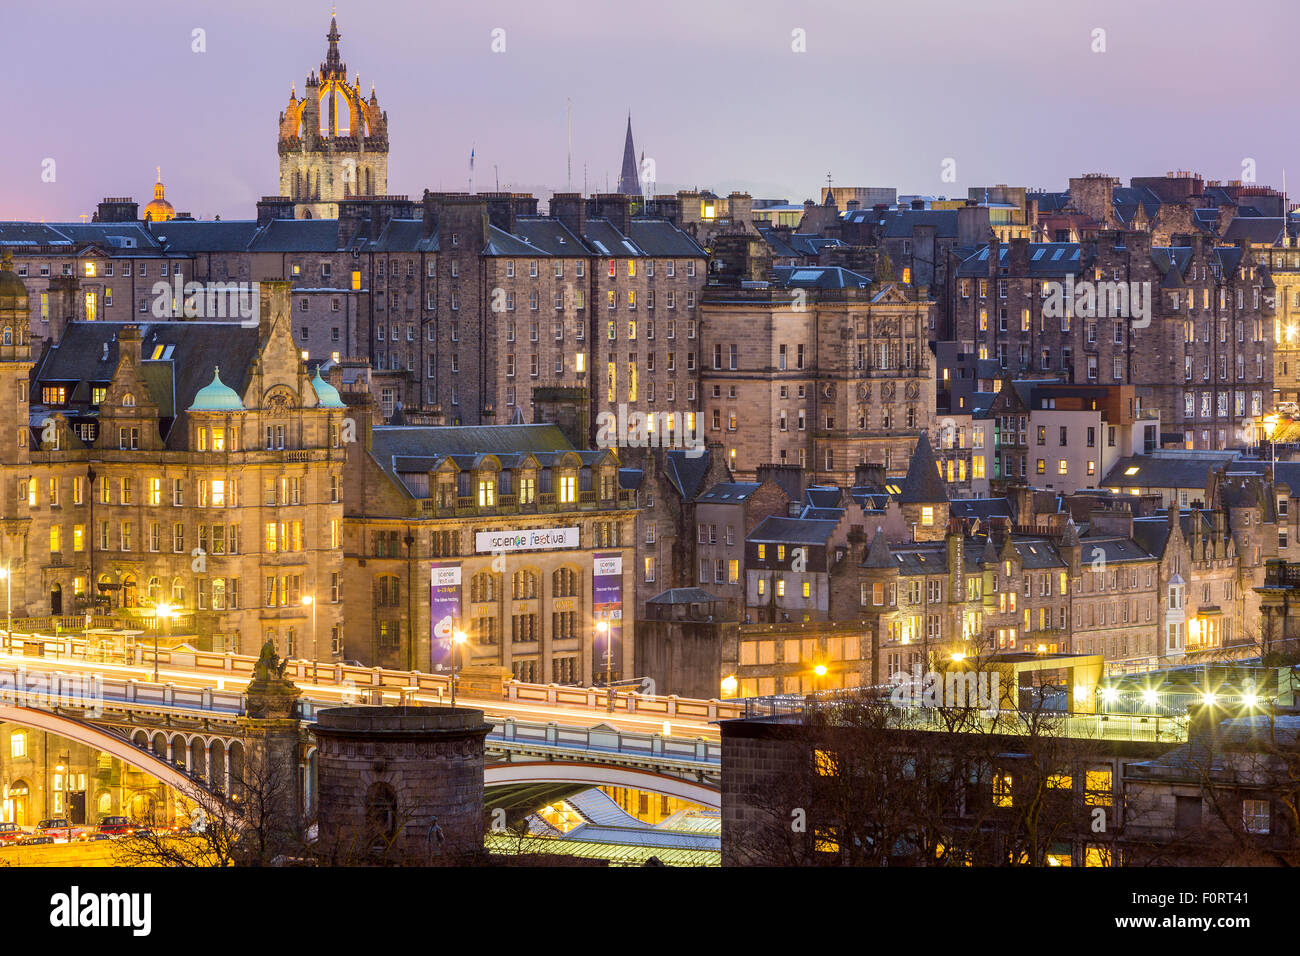 A view from Calton Hill over Edinburgh, City of Edinburgh, Scotland, United Kingdom, Europe. Stock Photo